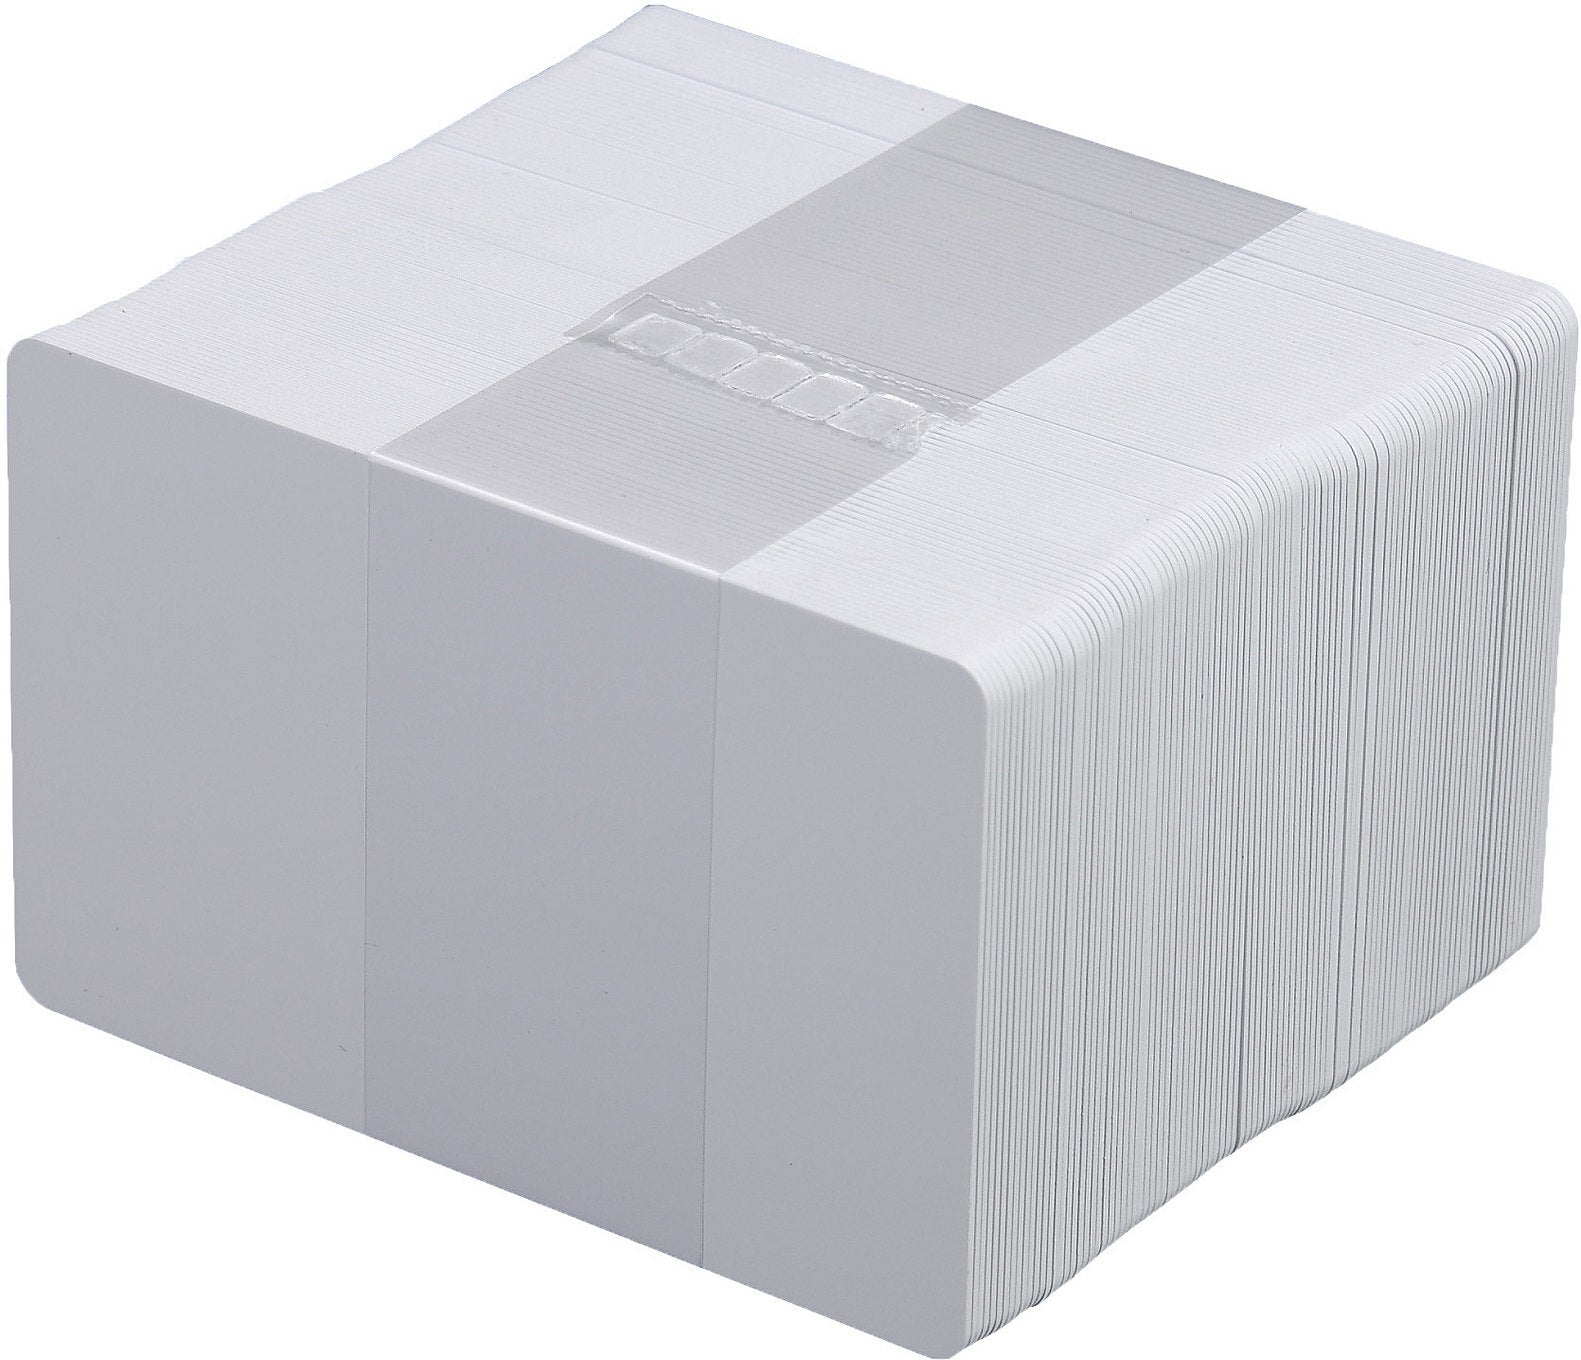 Blank White PVC Plastic ID Cards 760 micron | SPLIT PACKS - 100